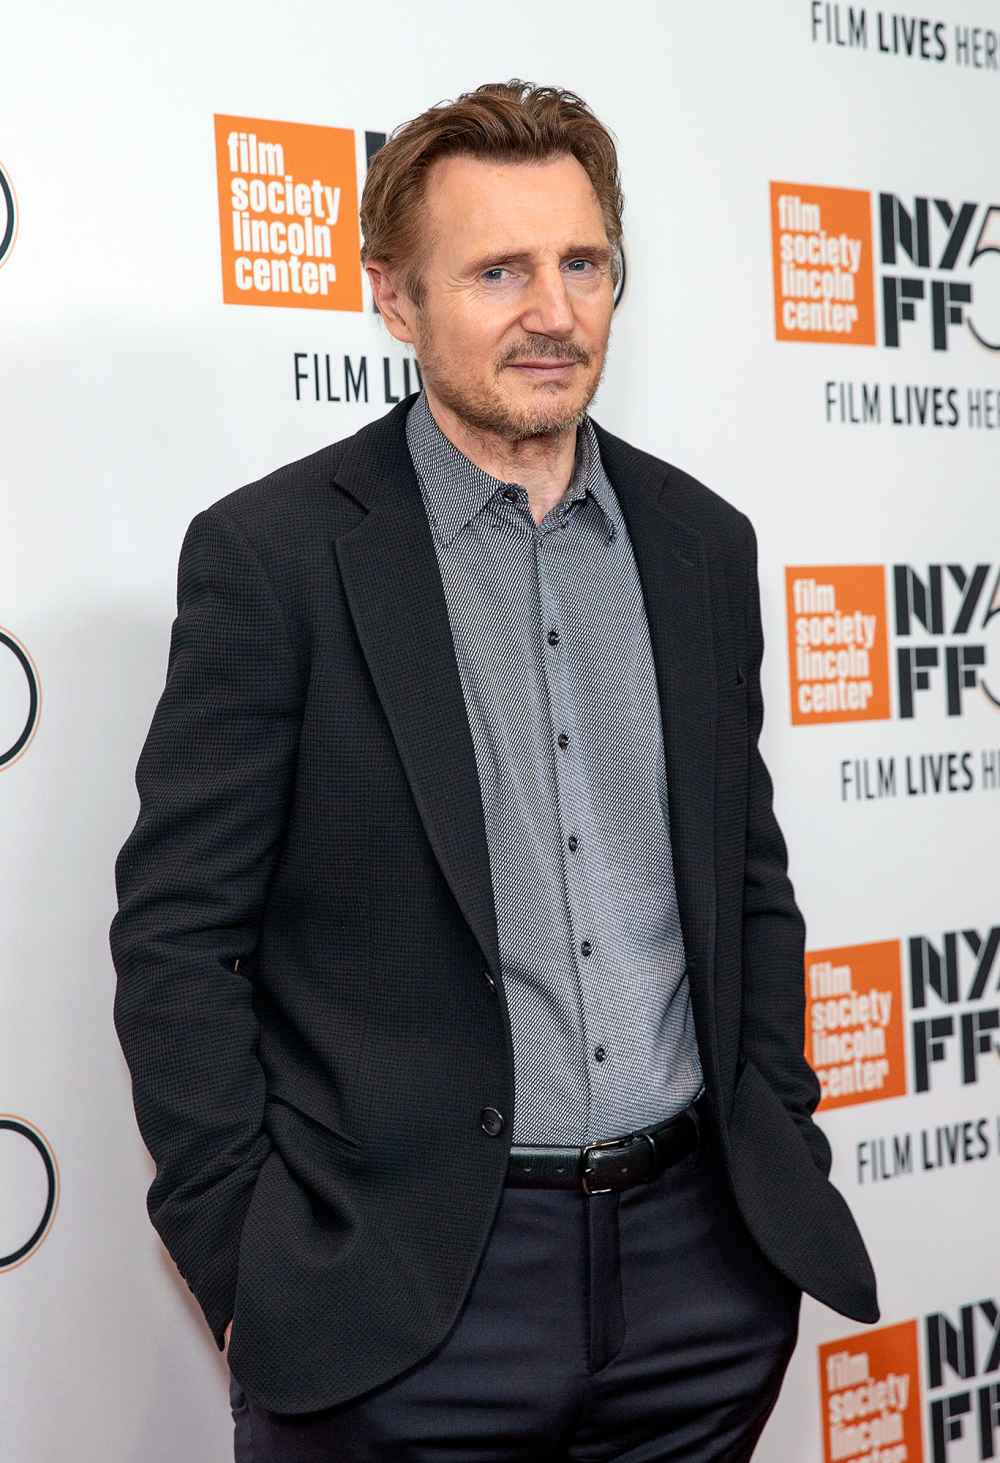 Liam Neeson: I Wanted to ‘Kill’ a ‘Black Bastard’ for Revenge After Rape